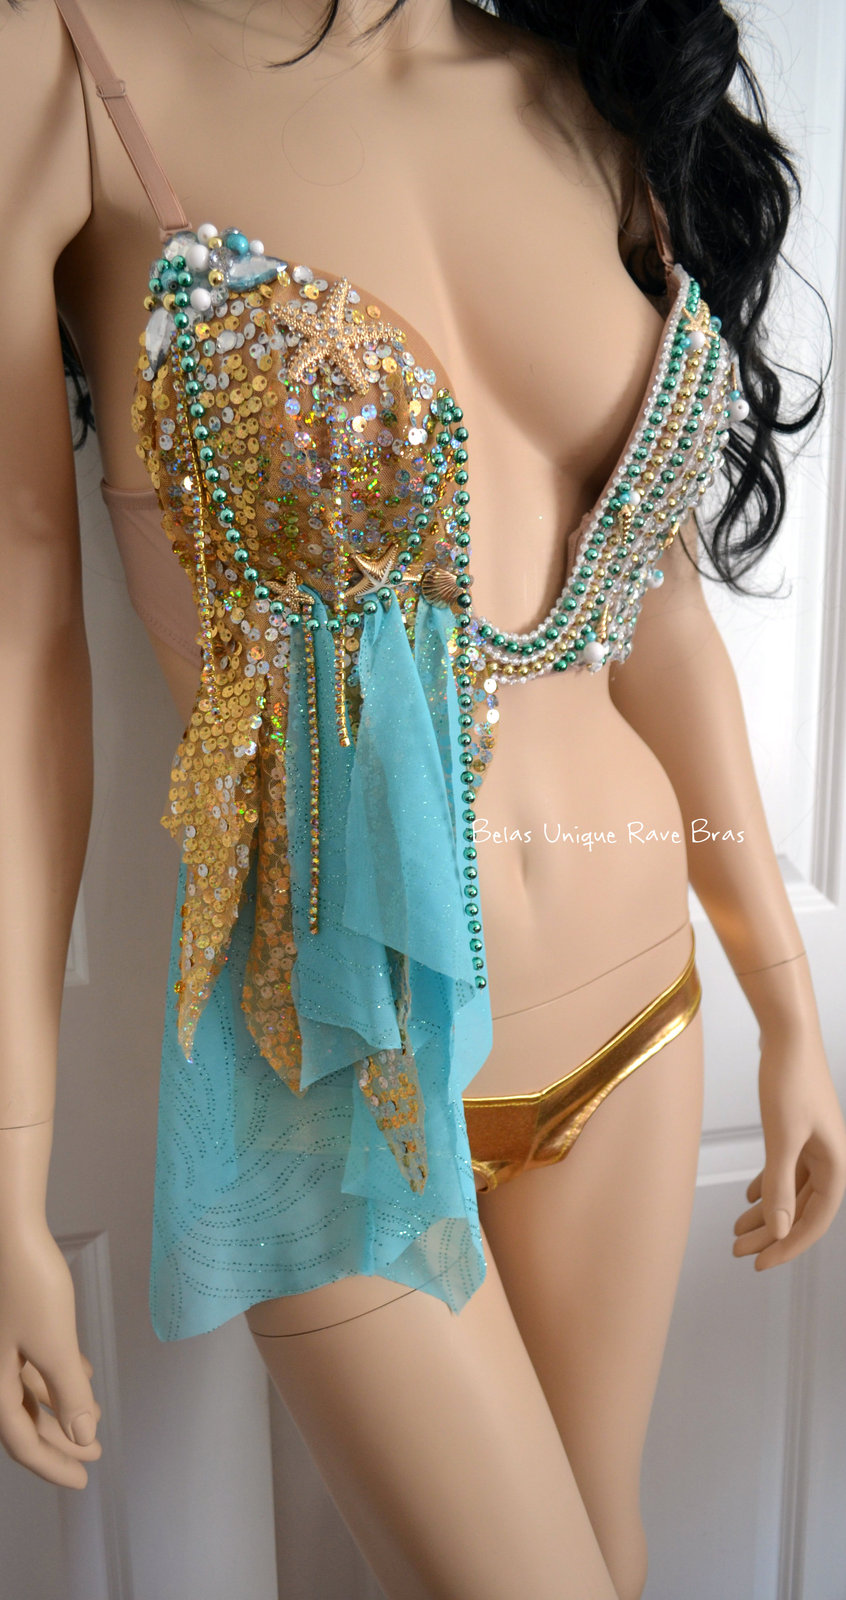 Gold Turquoise Siren Shell Mermaid Plunge Dance Costume Rave Bra Halloween